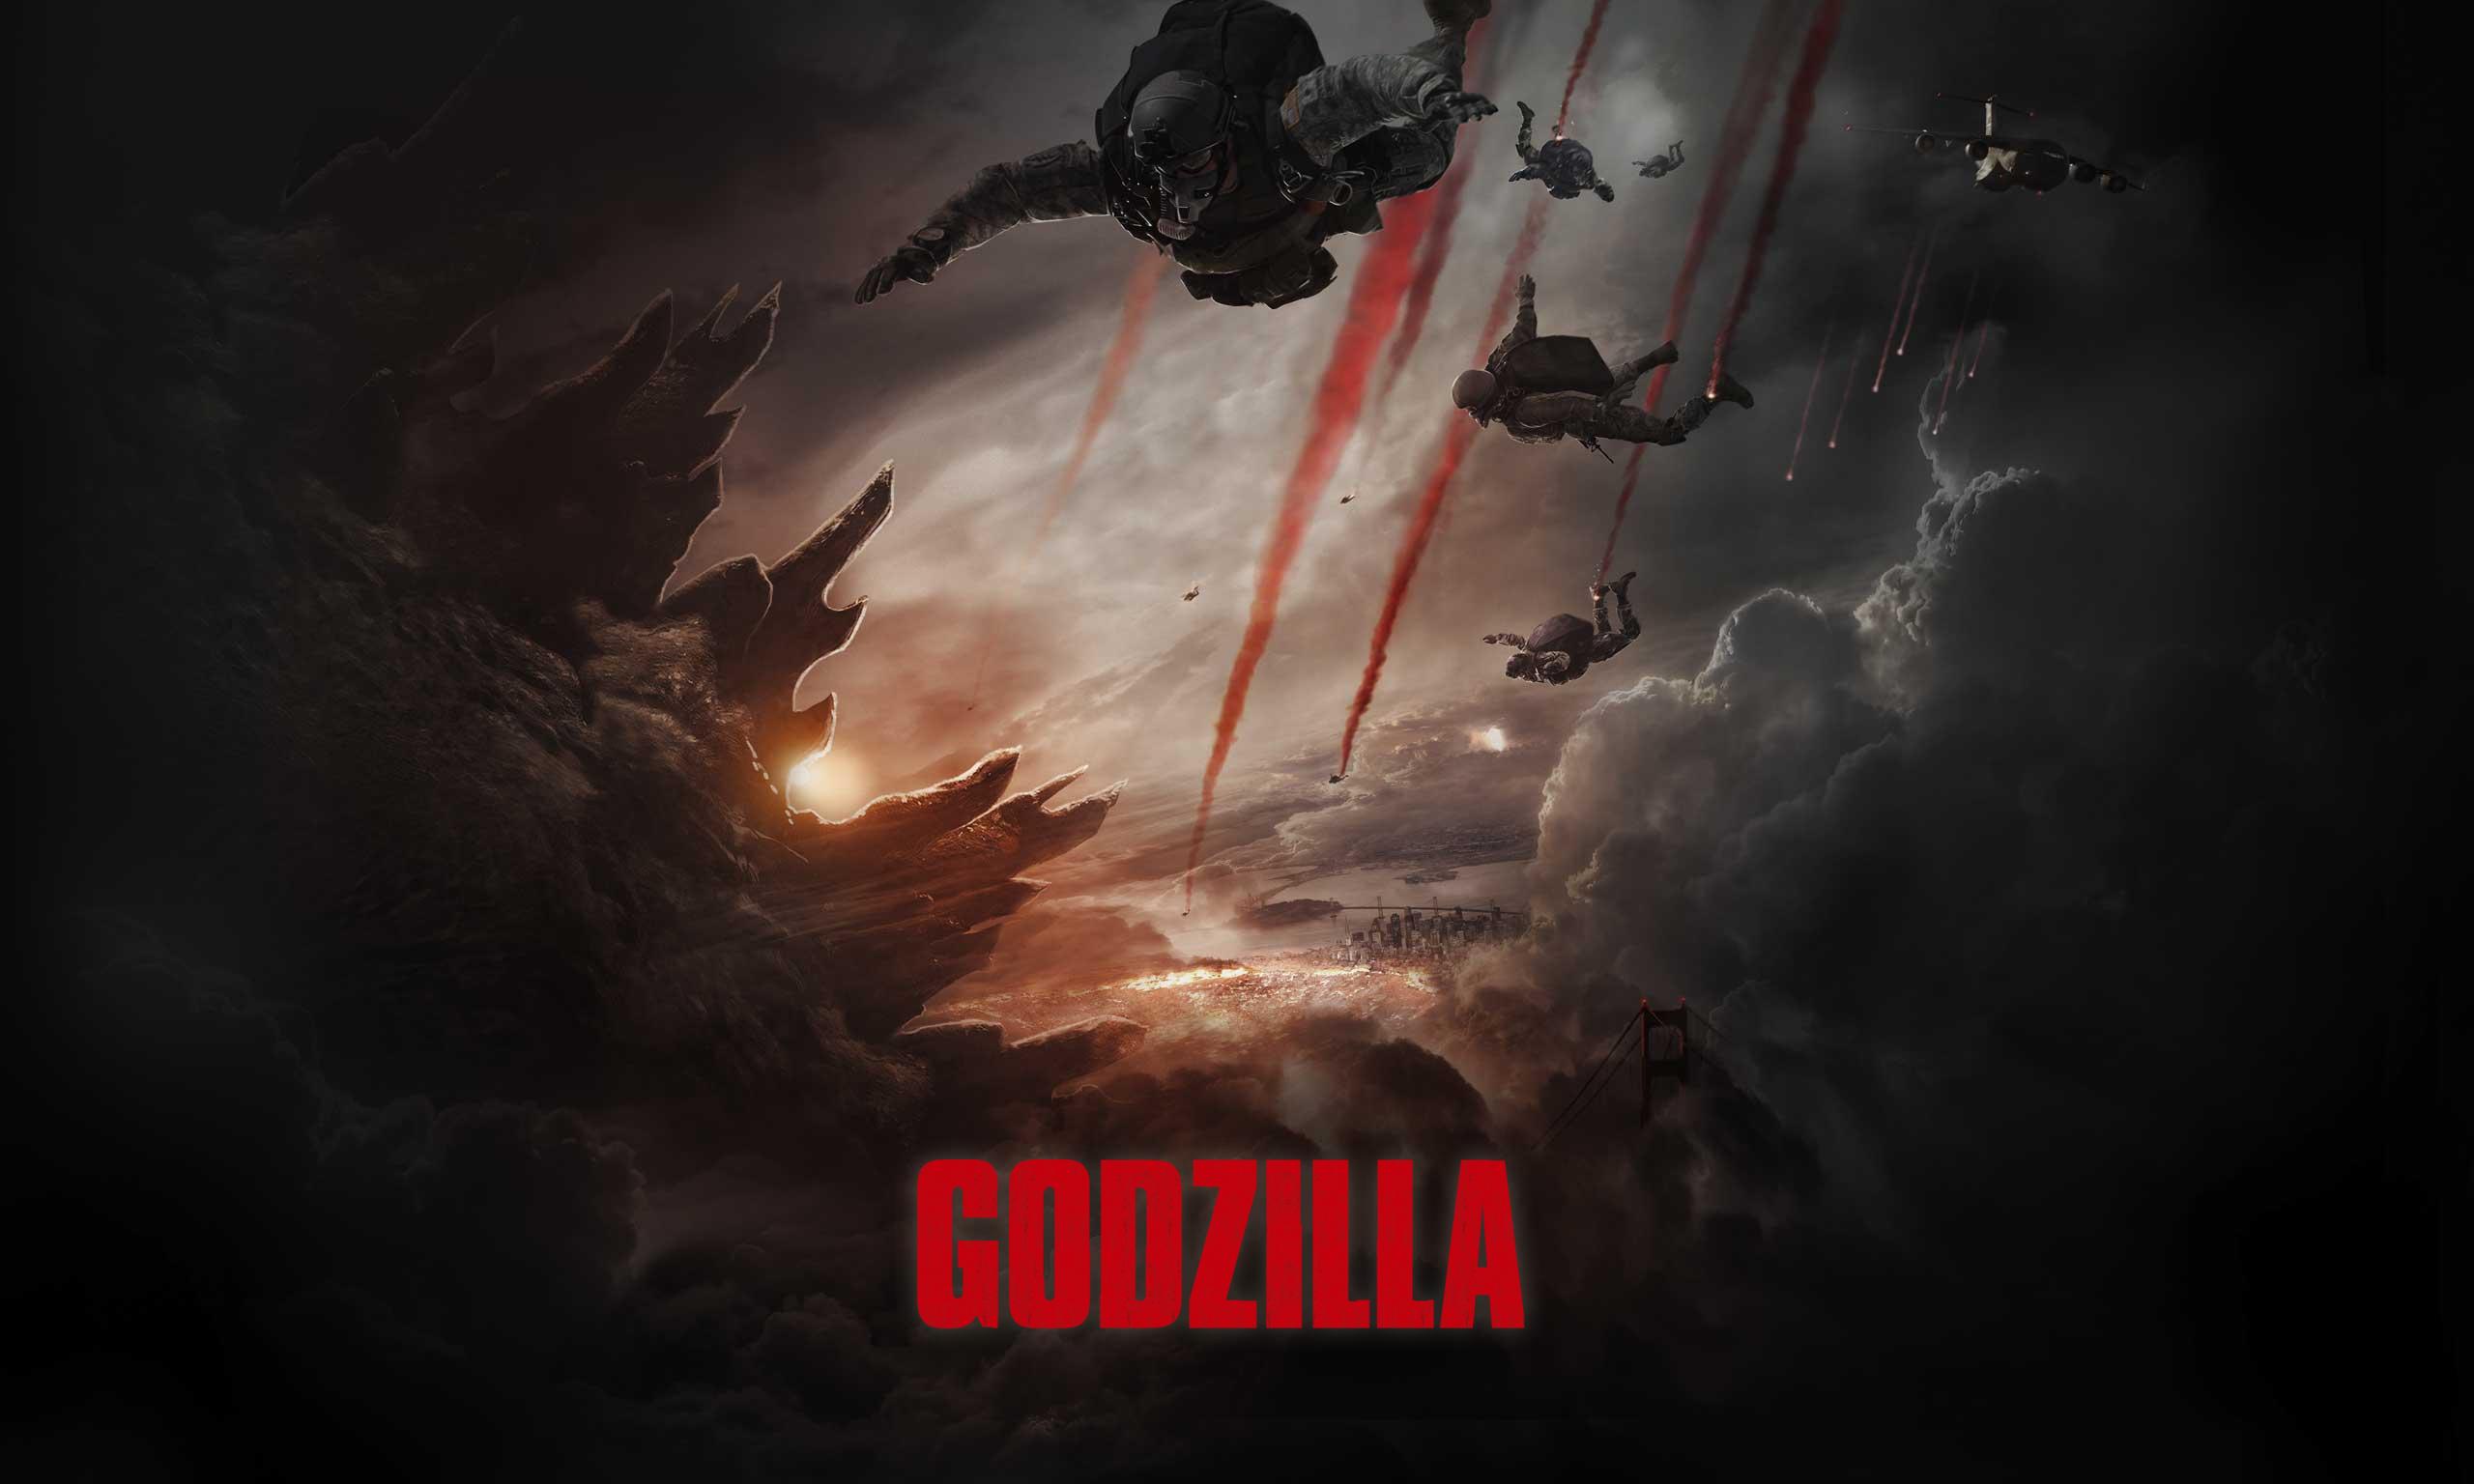 Godzilla 2014 Movie Wallpaper HD. Godzilla 2014 Movie